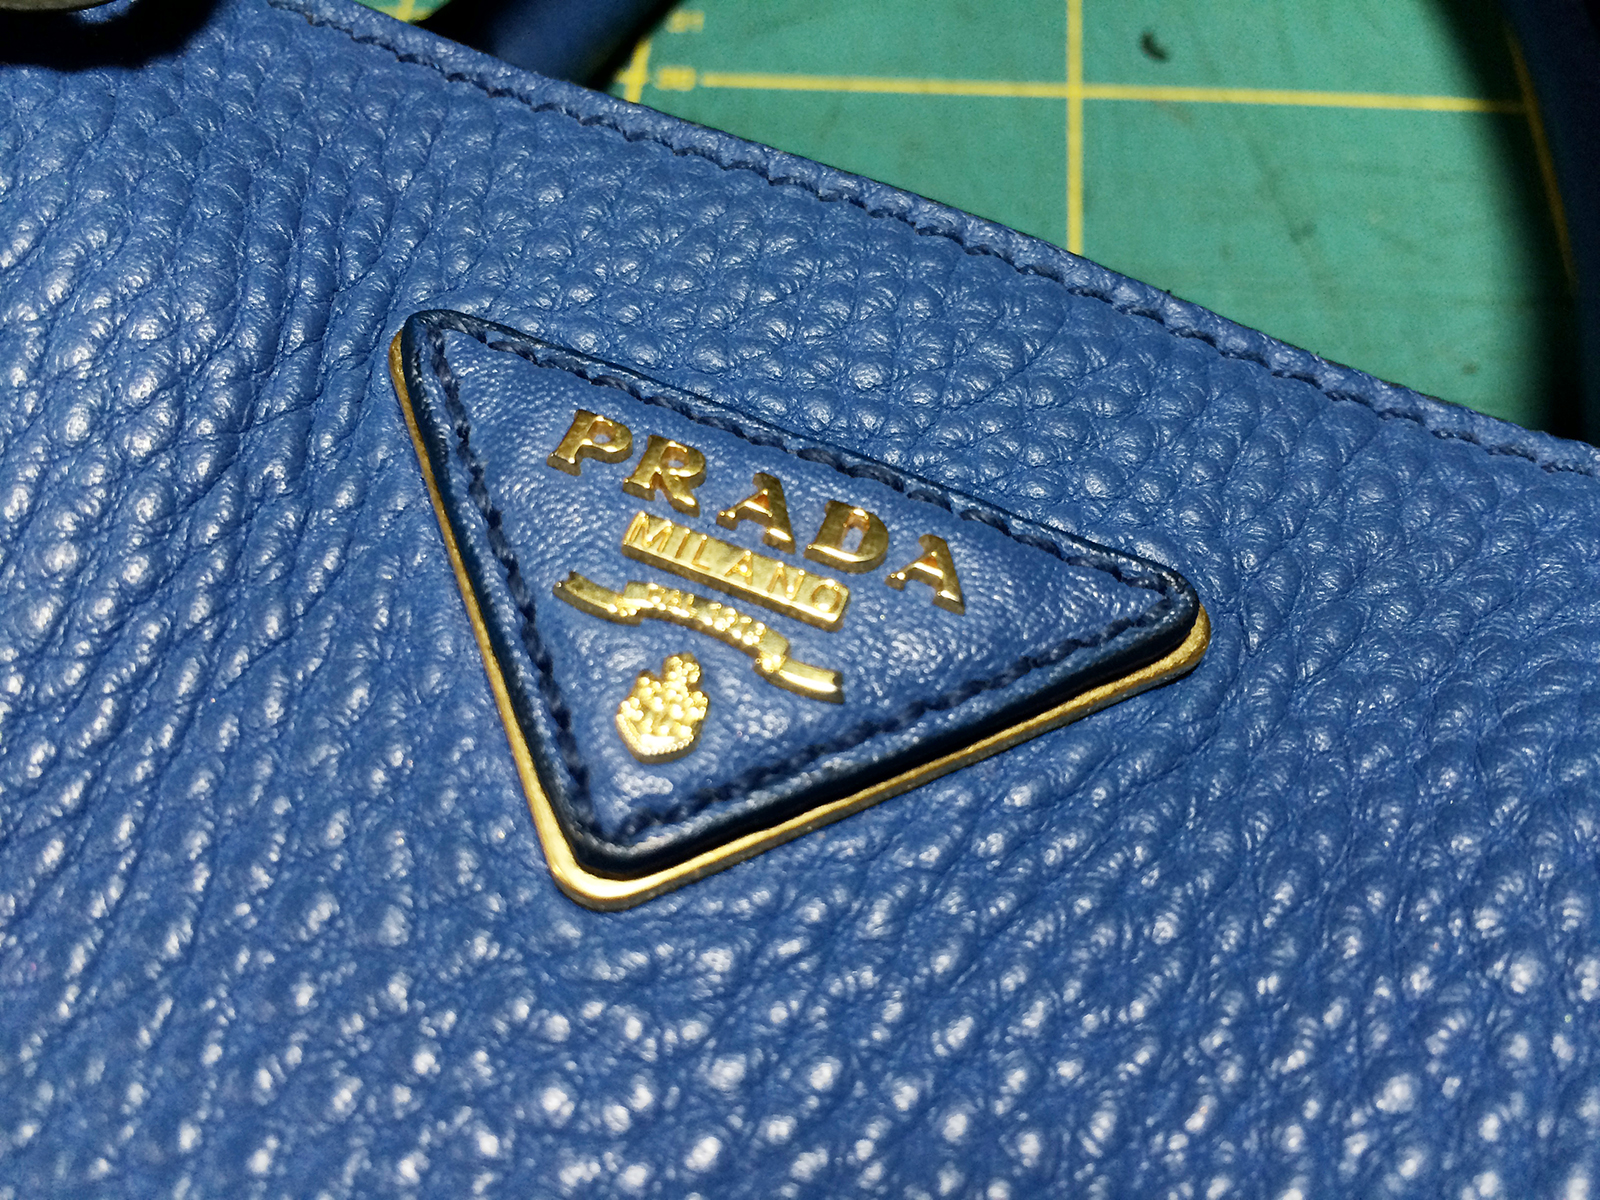 Prada Vitello Daino Leather Tote Bag Honest Review | I Make Leather Handbags